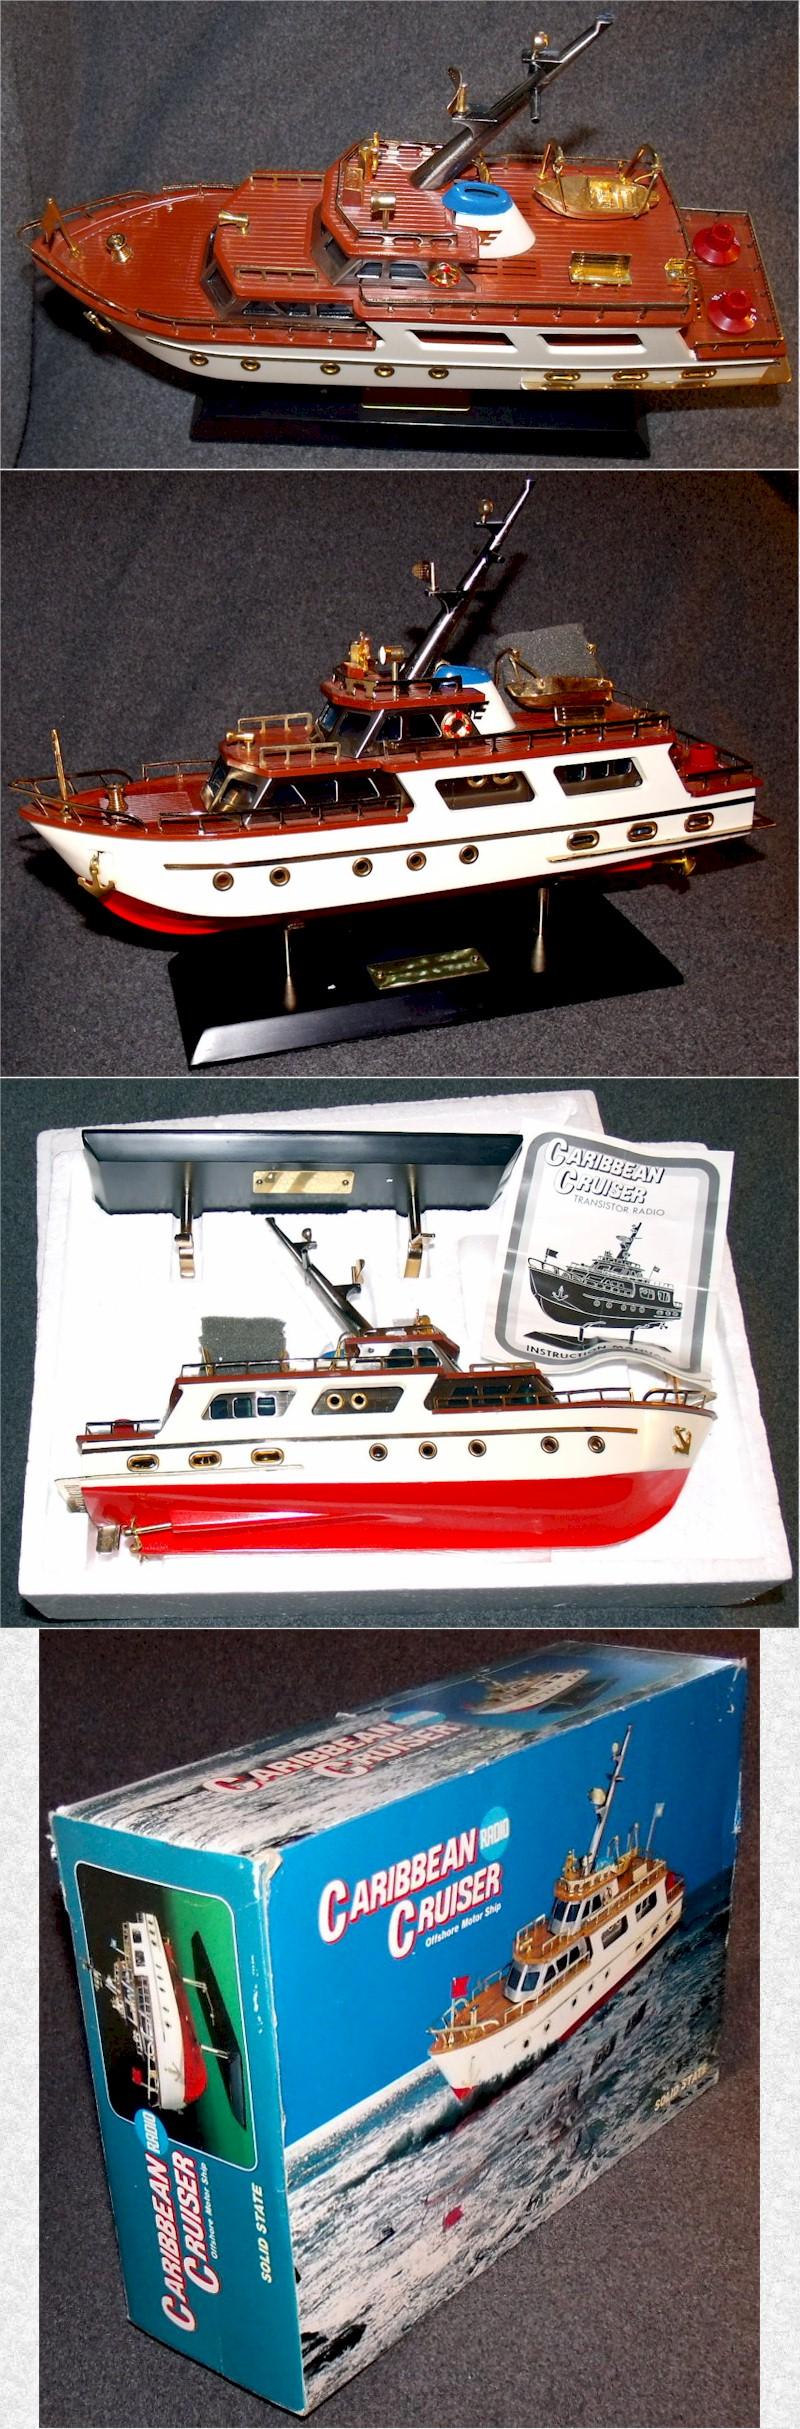 WACO Caribbean Cruiser Transistor (early 70s)